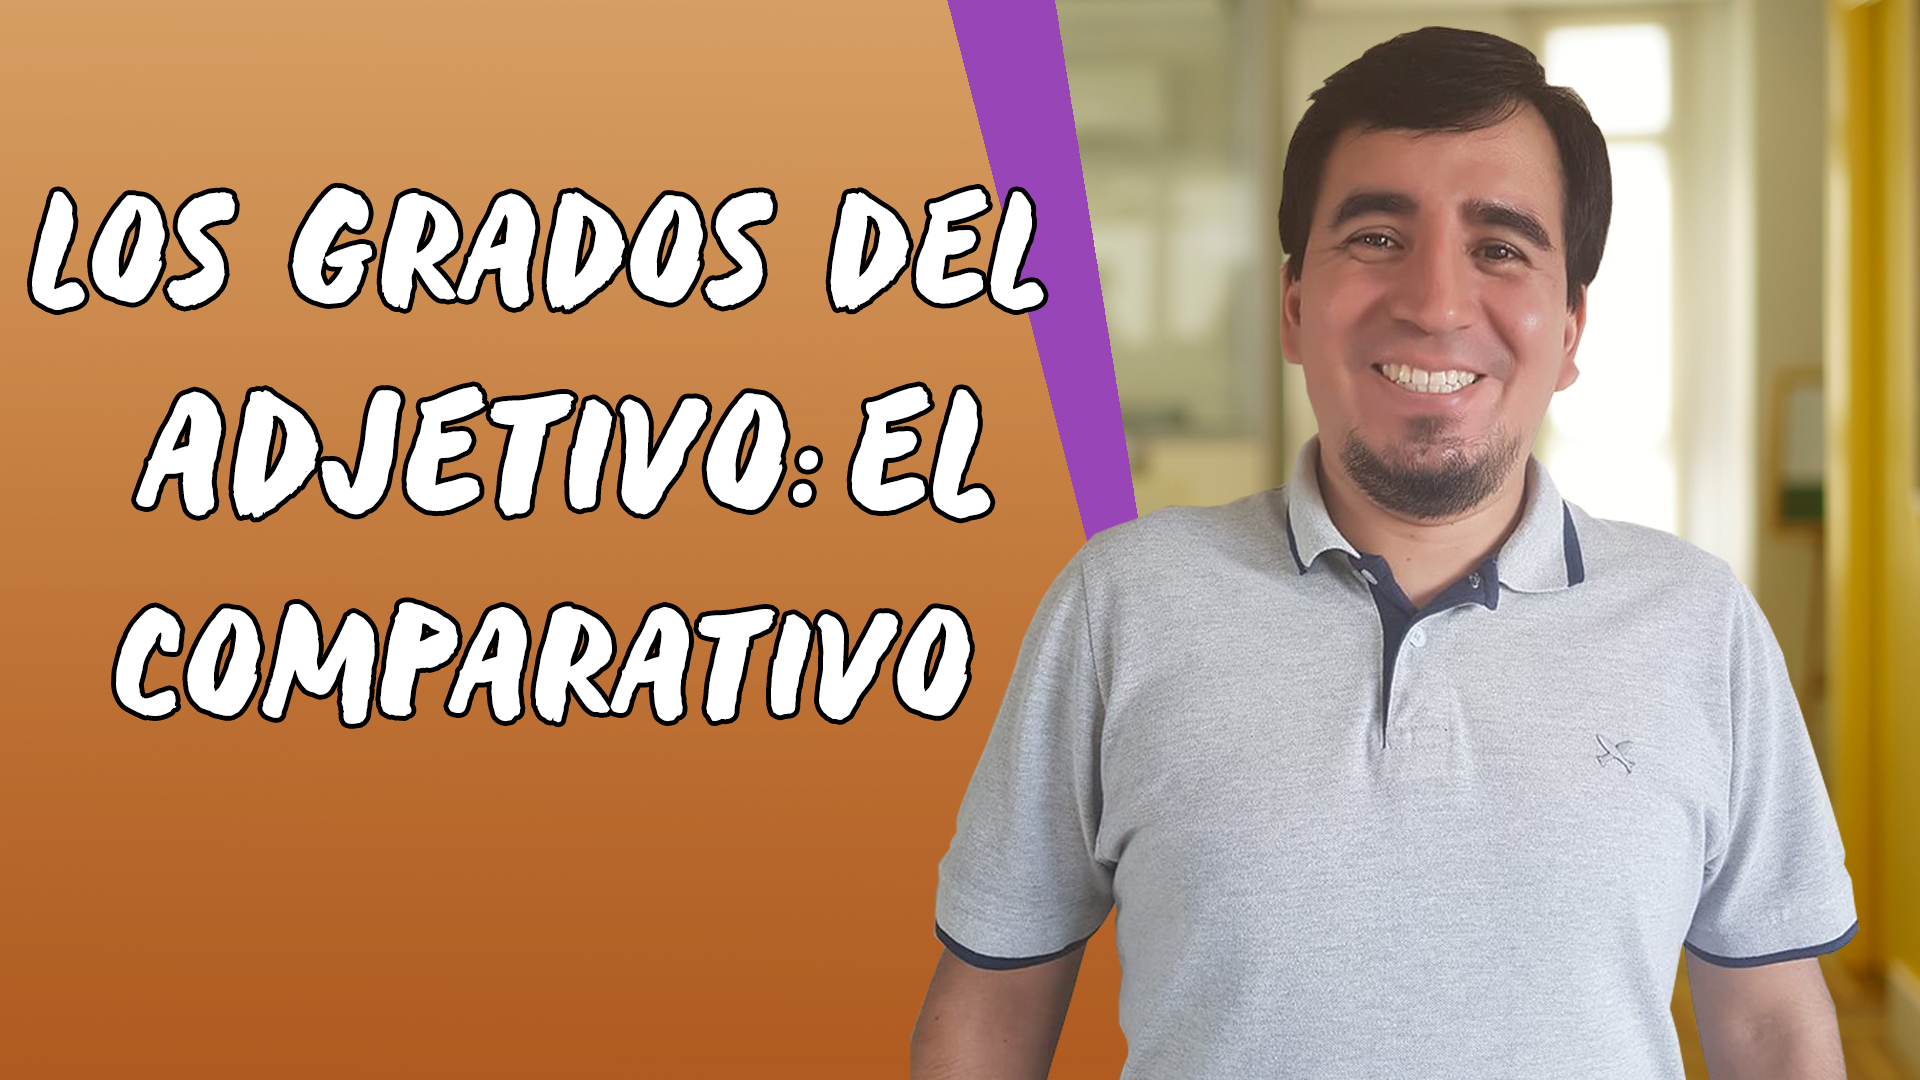 "Los Grados Del Adjetivo: El Comparativo" escrito sobre fundo laranja ao lado da imagem do professor